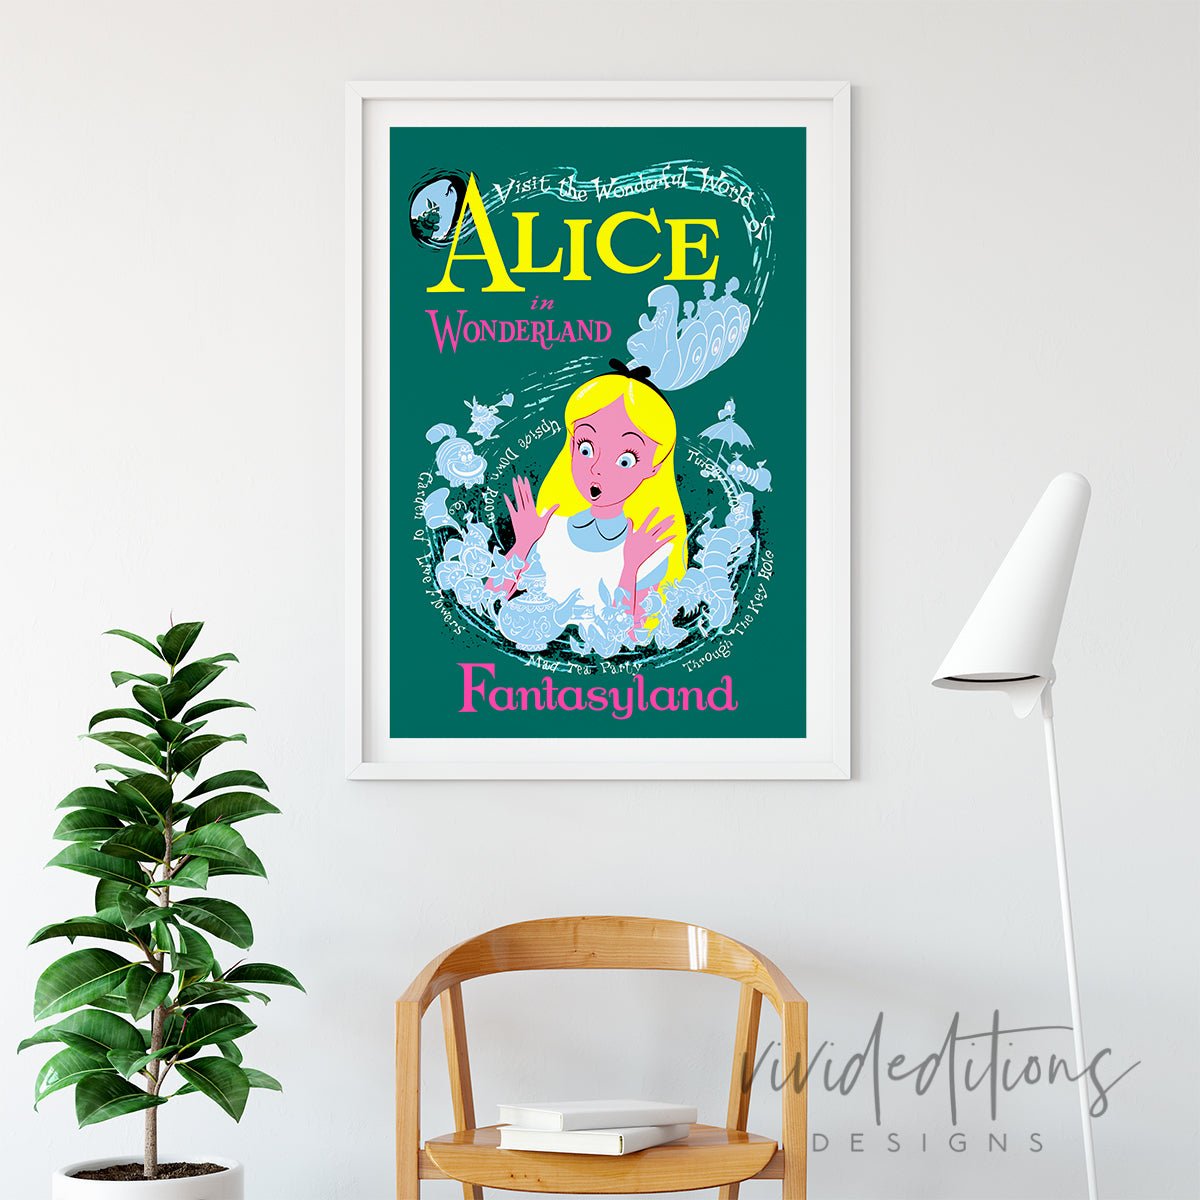 Alice in Wonderland, Disneyland Poster Print - VividEditions